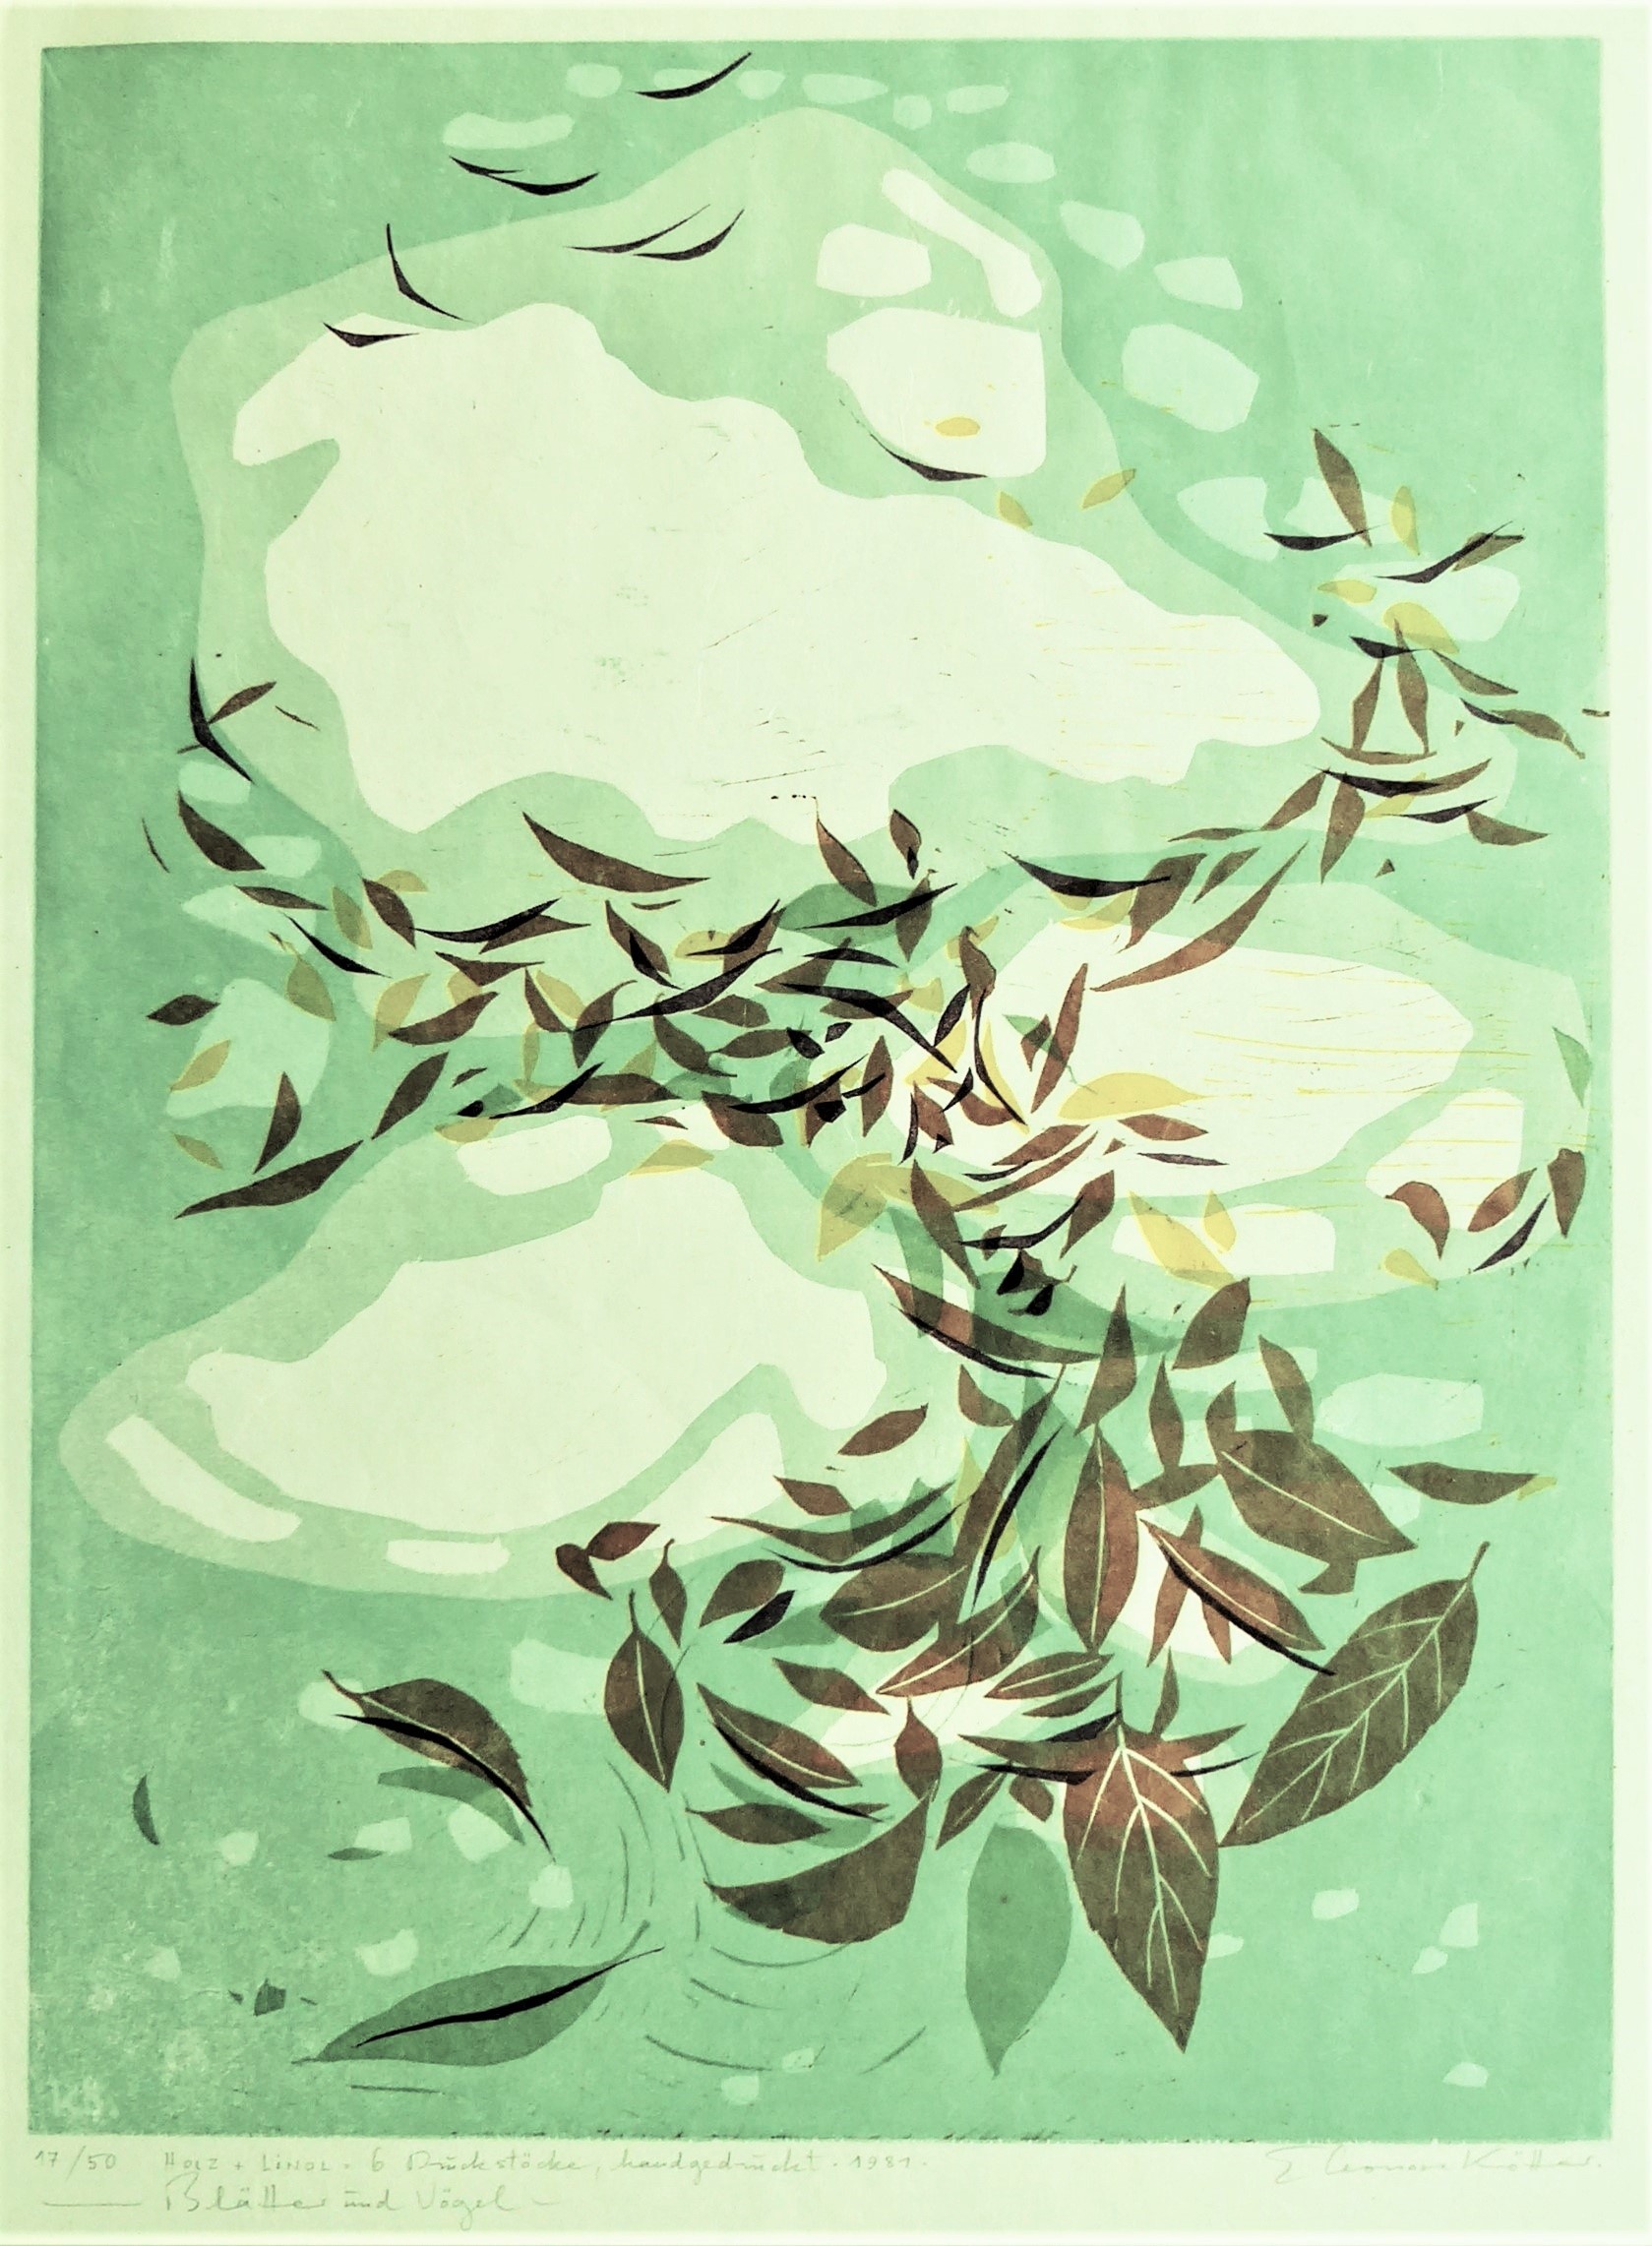 Blätter und Vögel (Kunststiftung Eleonore Kötter CC BY-NC-SA)